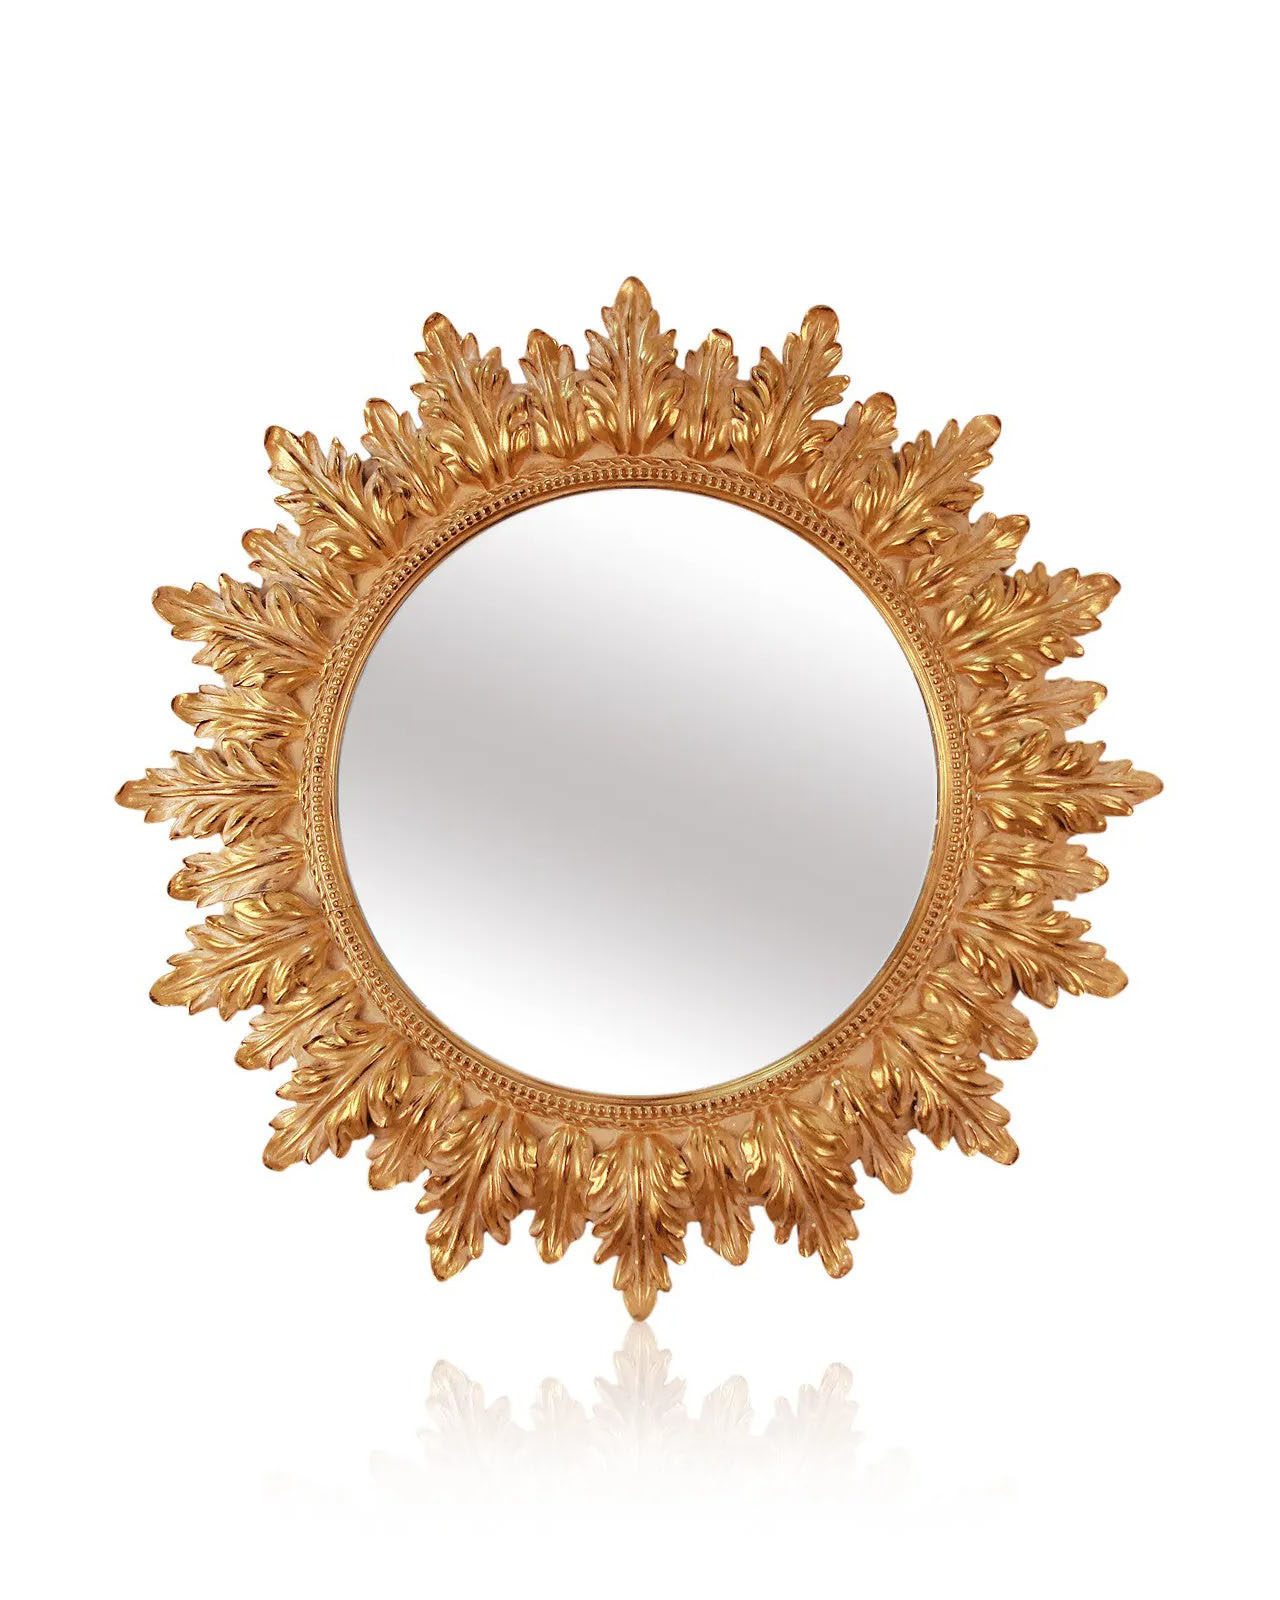 Louvre home. Напольное зеркало Венето Florentine Silver/19. Зеркало "Alba". Зеркало настенное круглое золотое "Гелиос Голд".